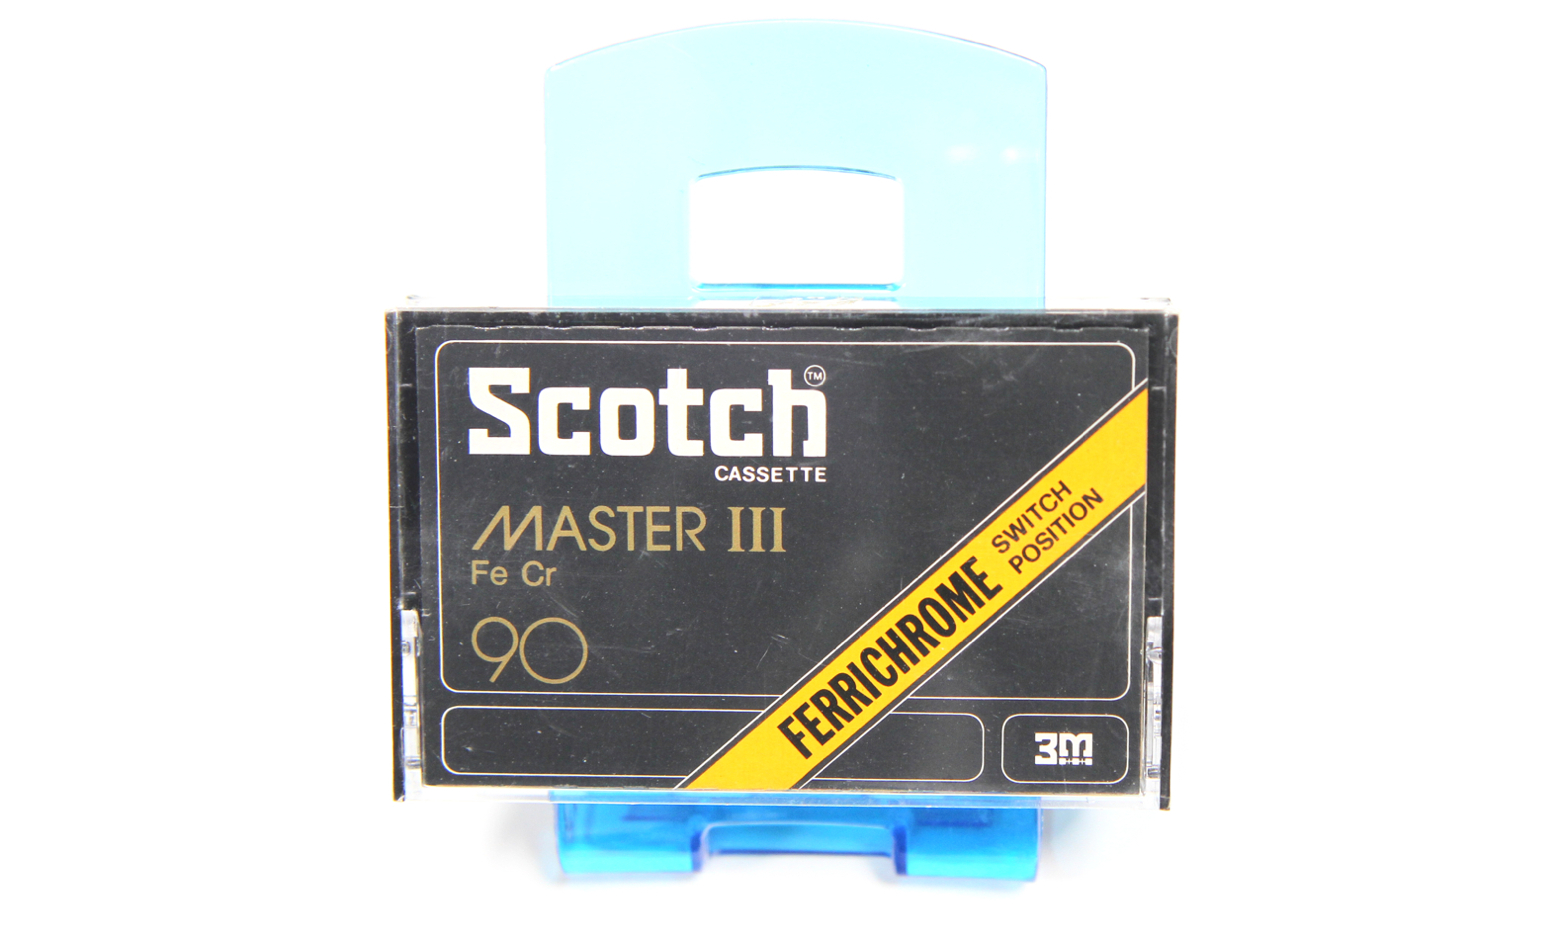 SCOTCH MASTER III 90 Position Chrome